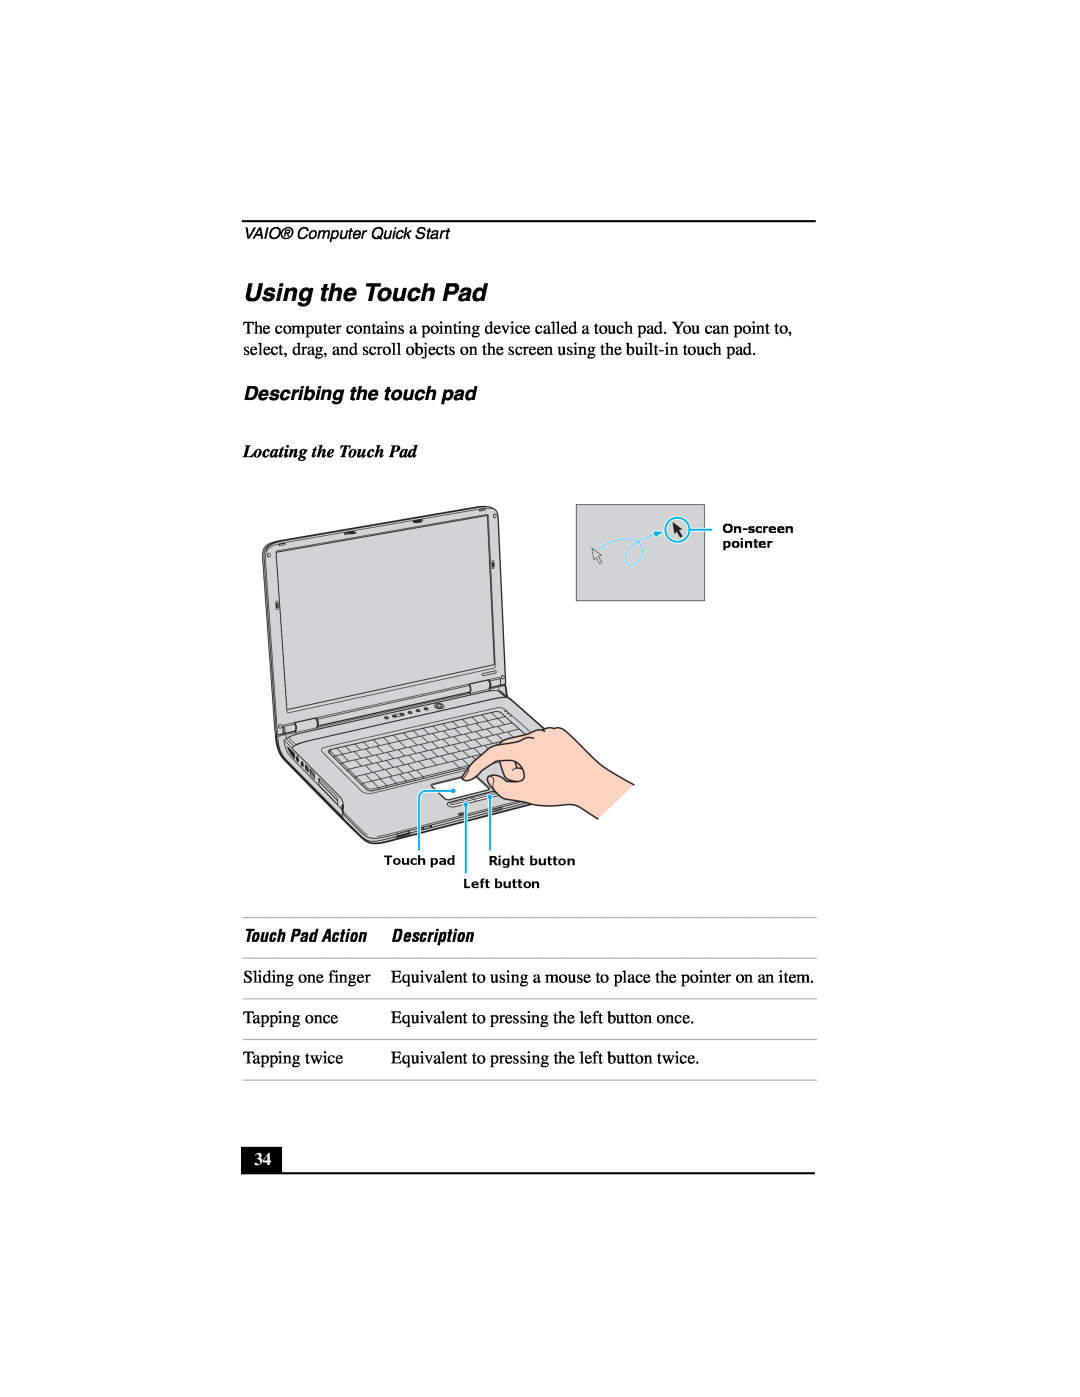 Sony VGN-A600 Using the Touch Pad, Describing the touch pad, Locating the Touch Pad, Touch Pad Action, Description 